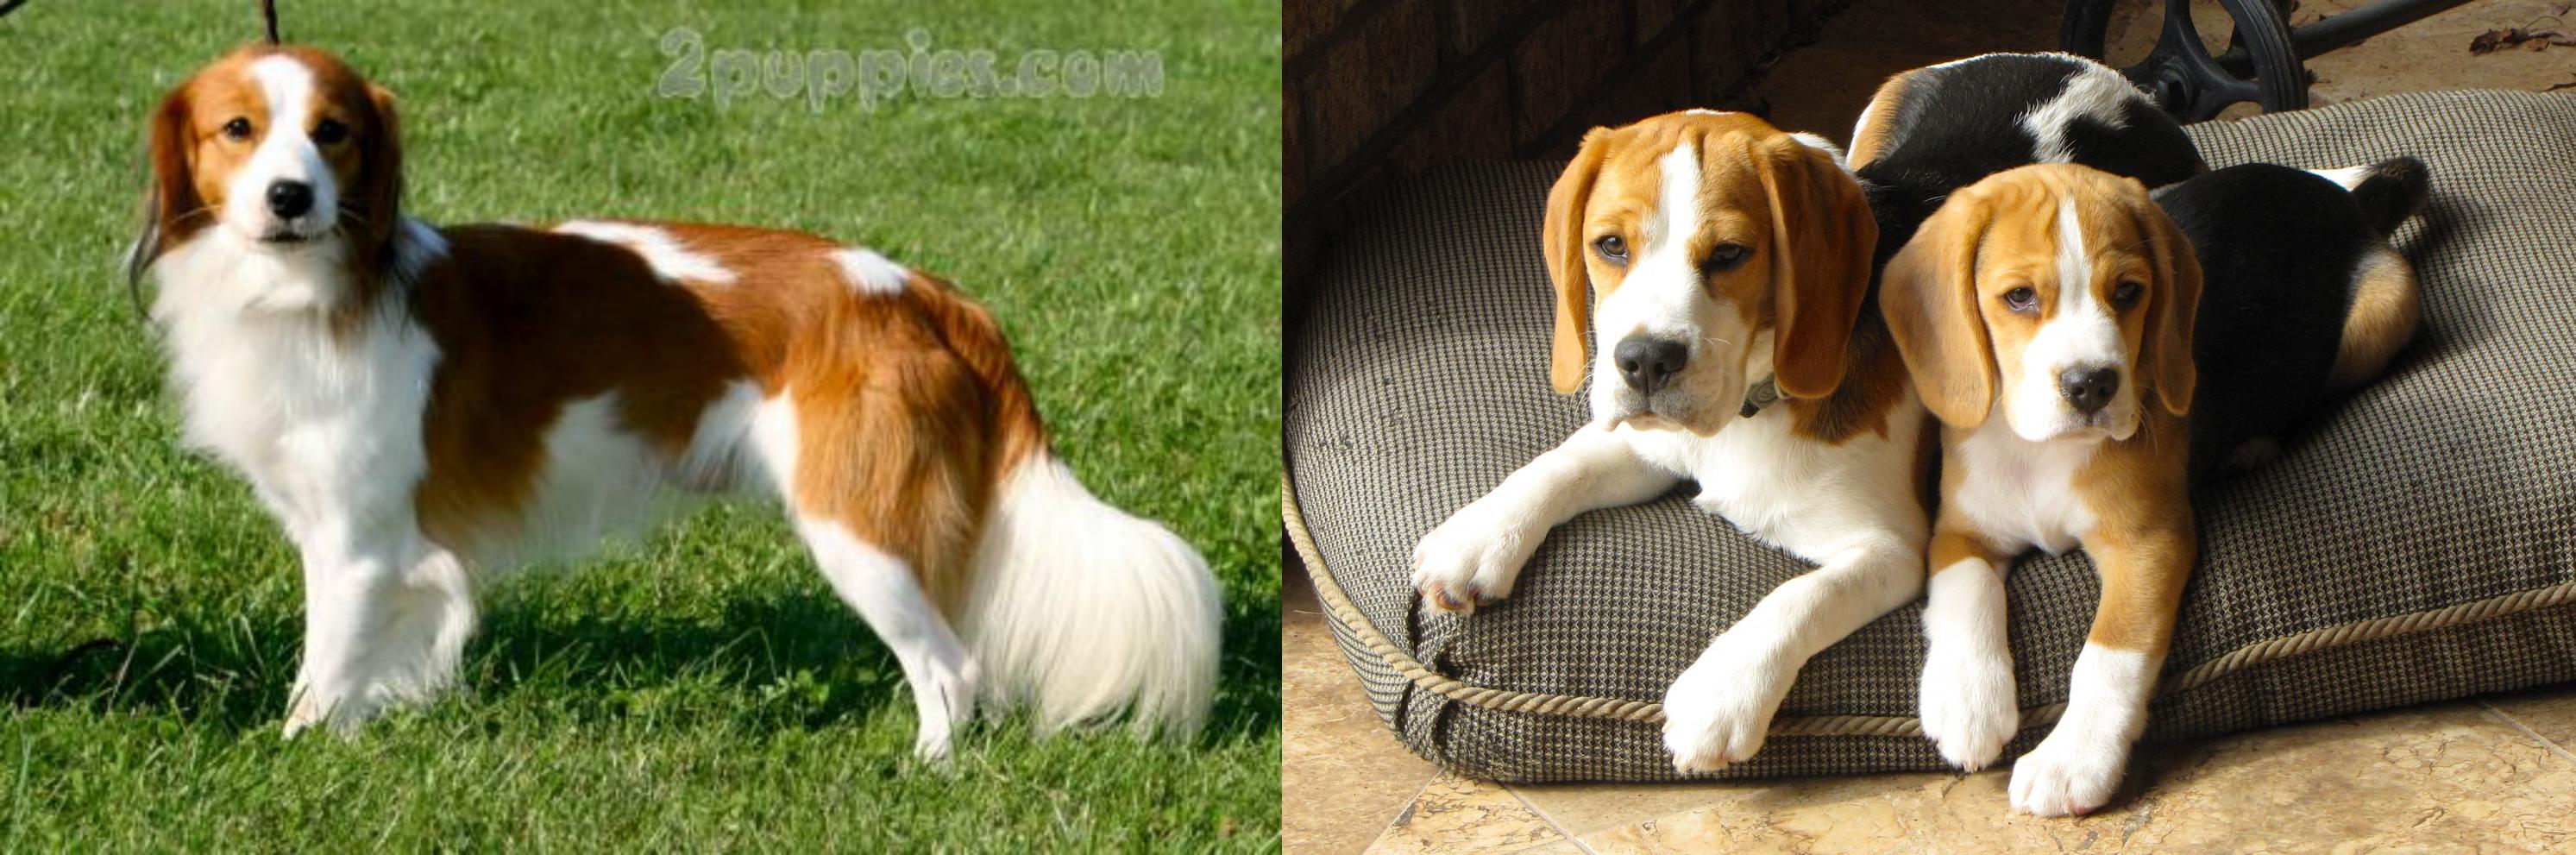 Kooikerhondje Vs Beagle Breed Comparison Mydogbreeds